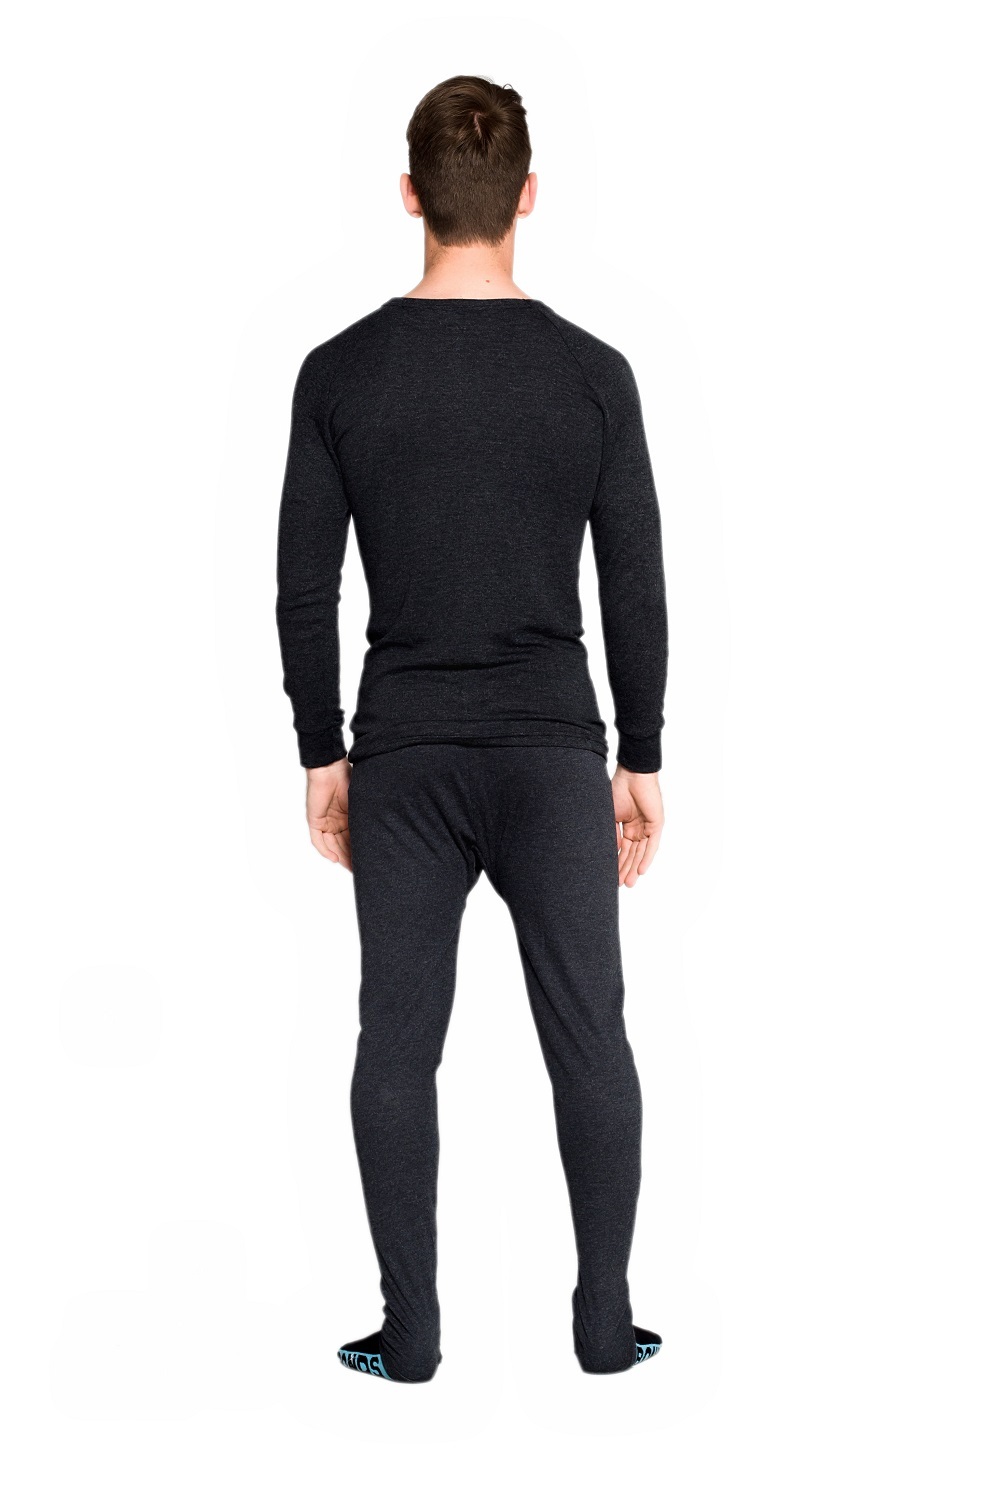 Black Bear Boys' Thermal Underwear Set 2-Piece Performance Base Layer Long Sleeve T-Shirt and Long Johns Set 